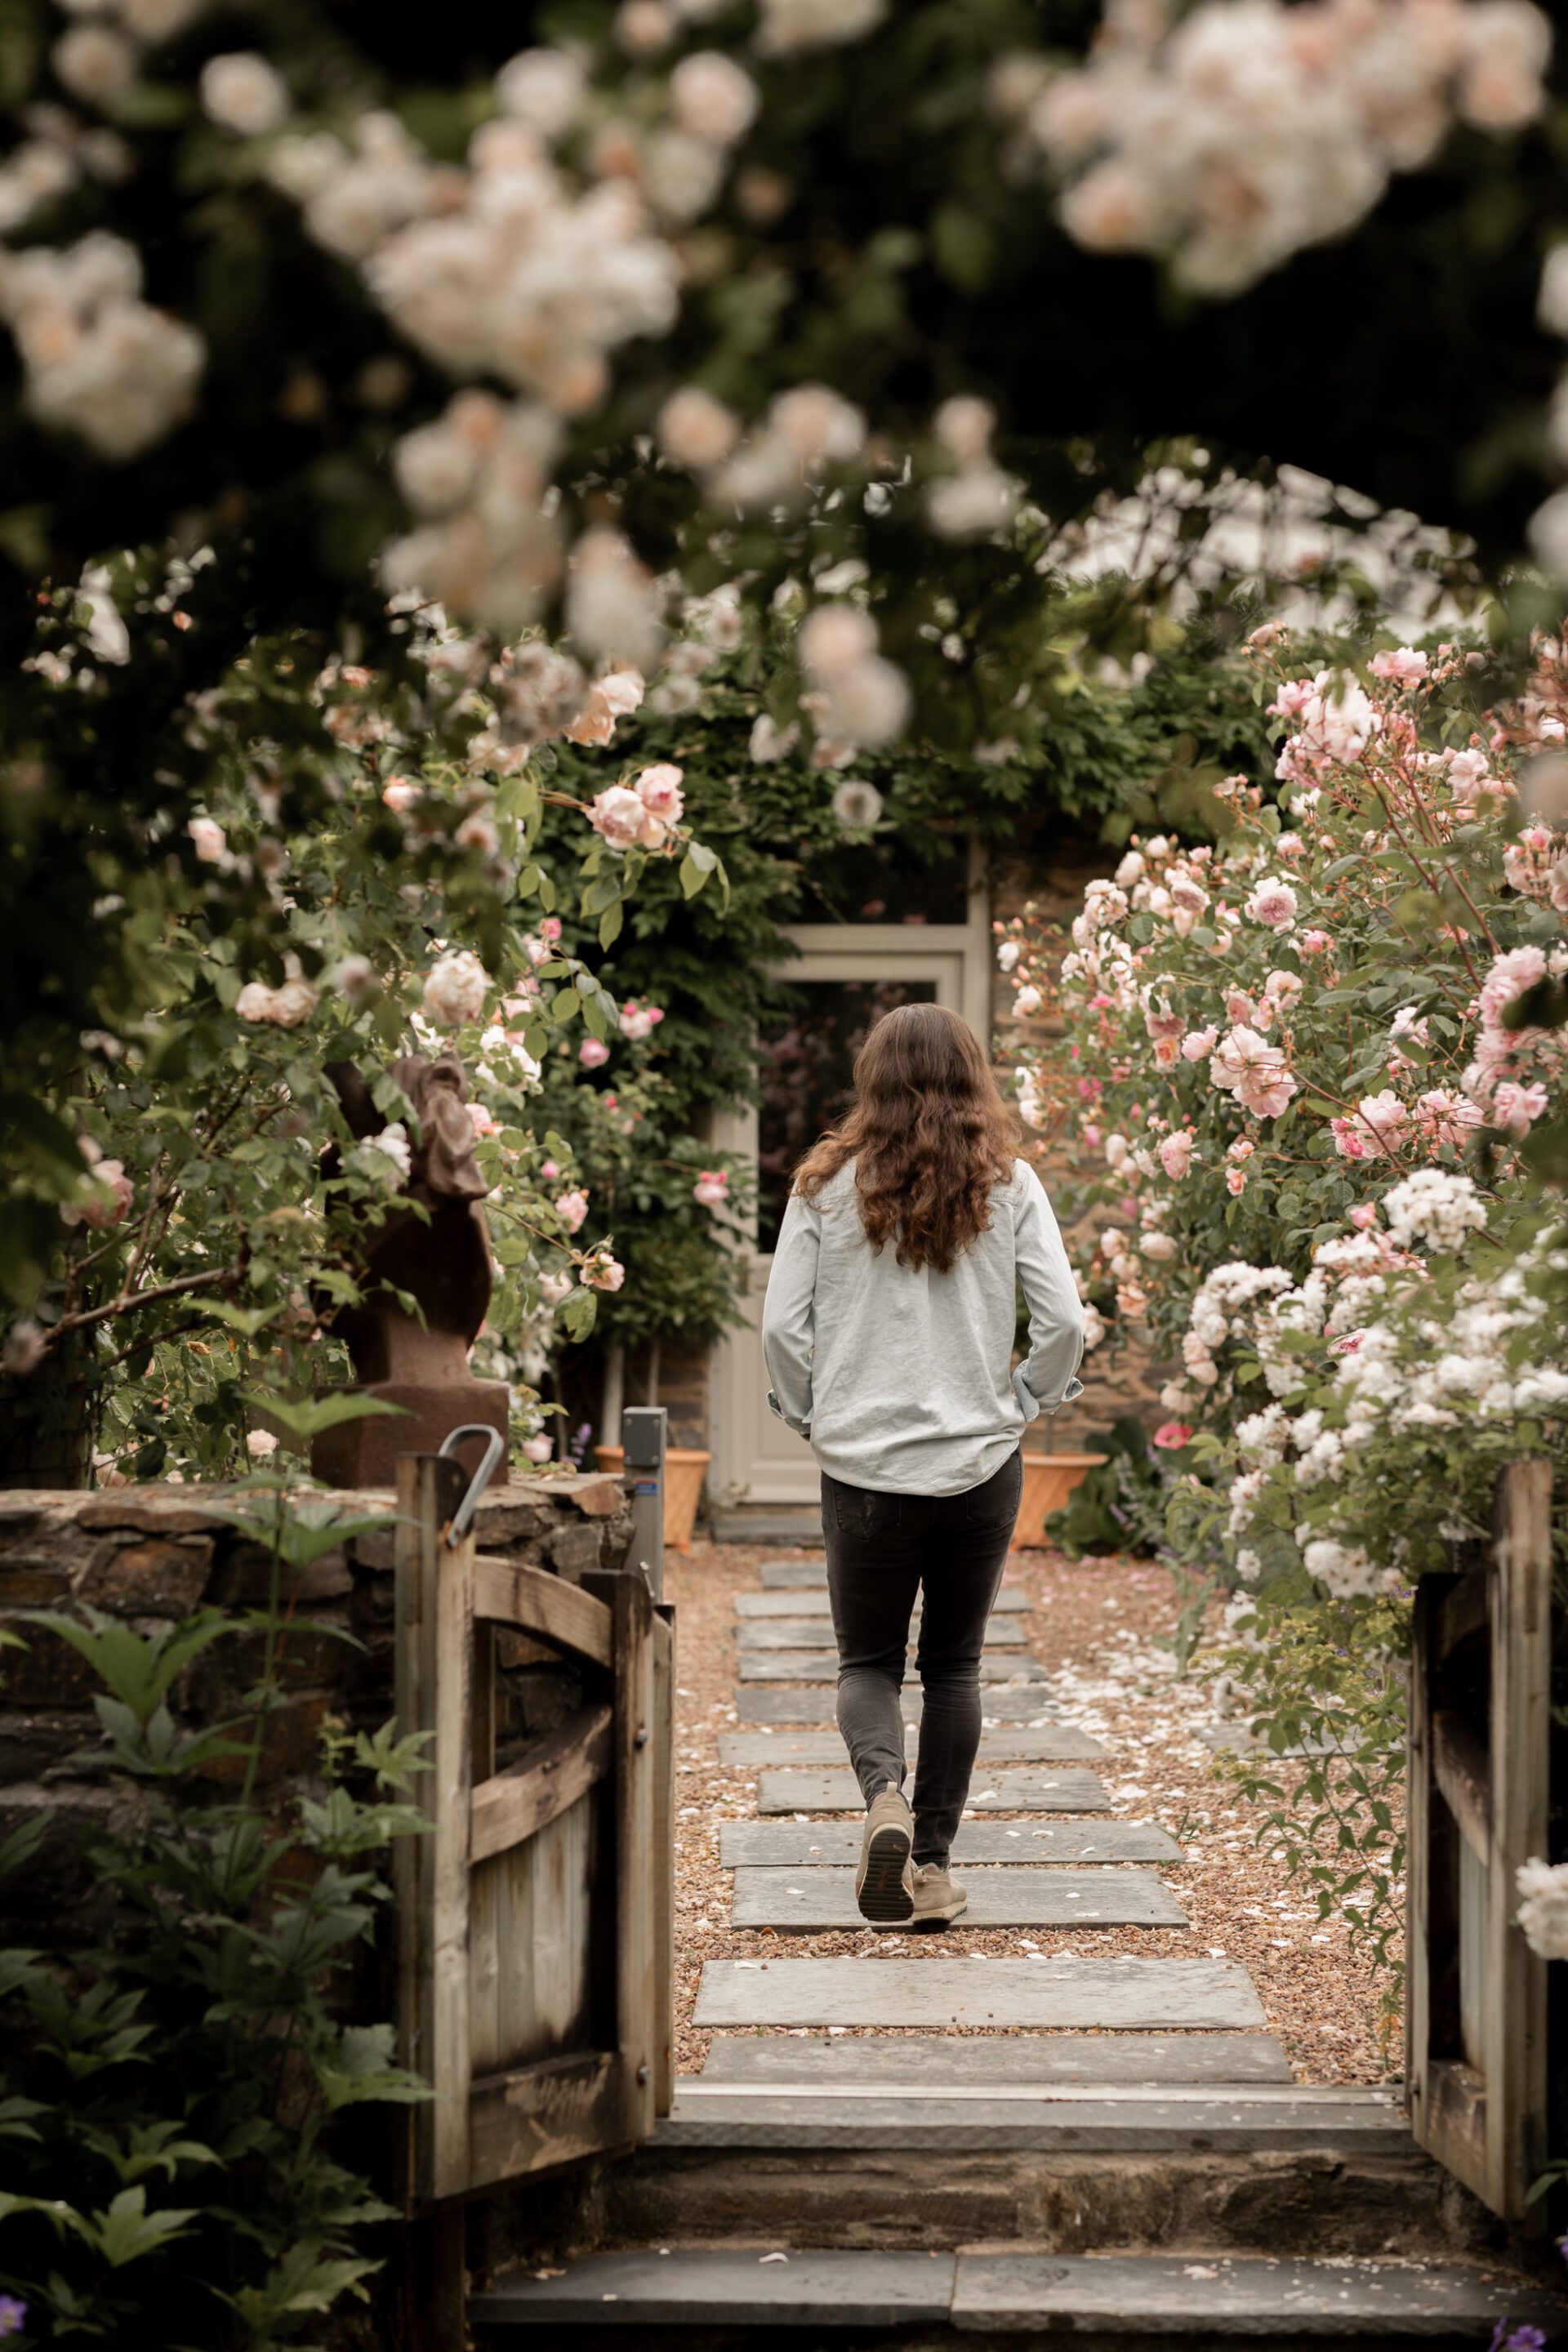 A bridesmaid walks towards the house through the beautiful homegrown roses